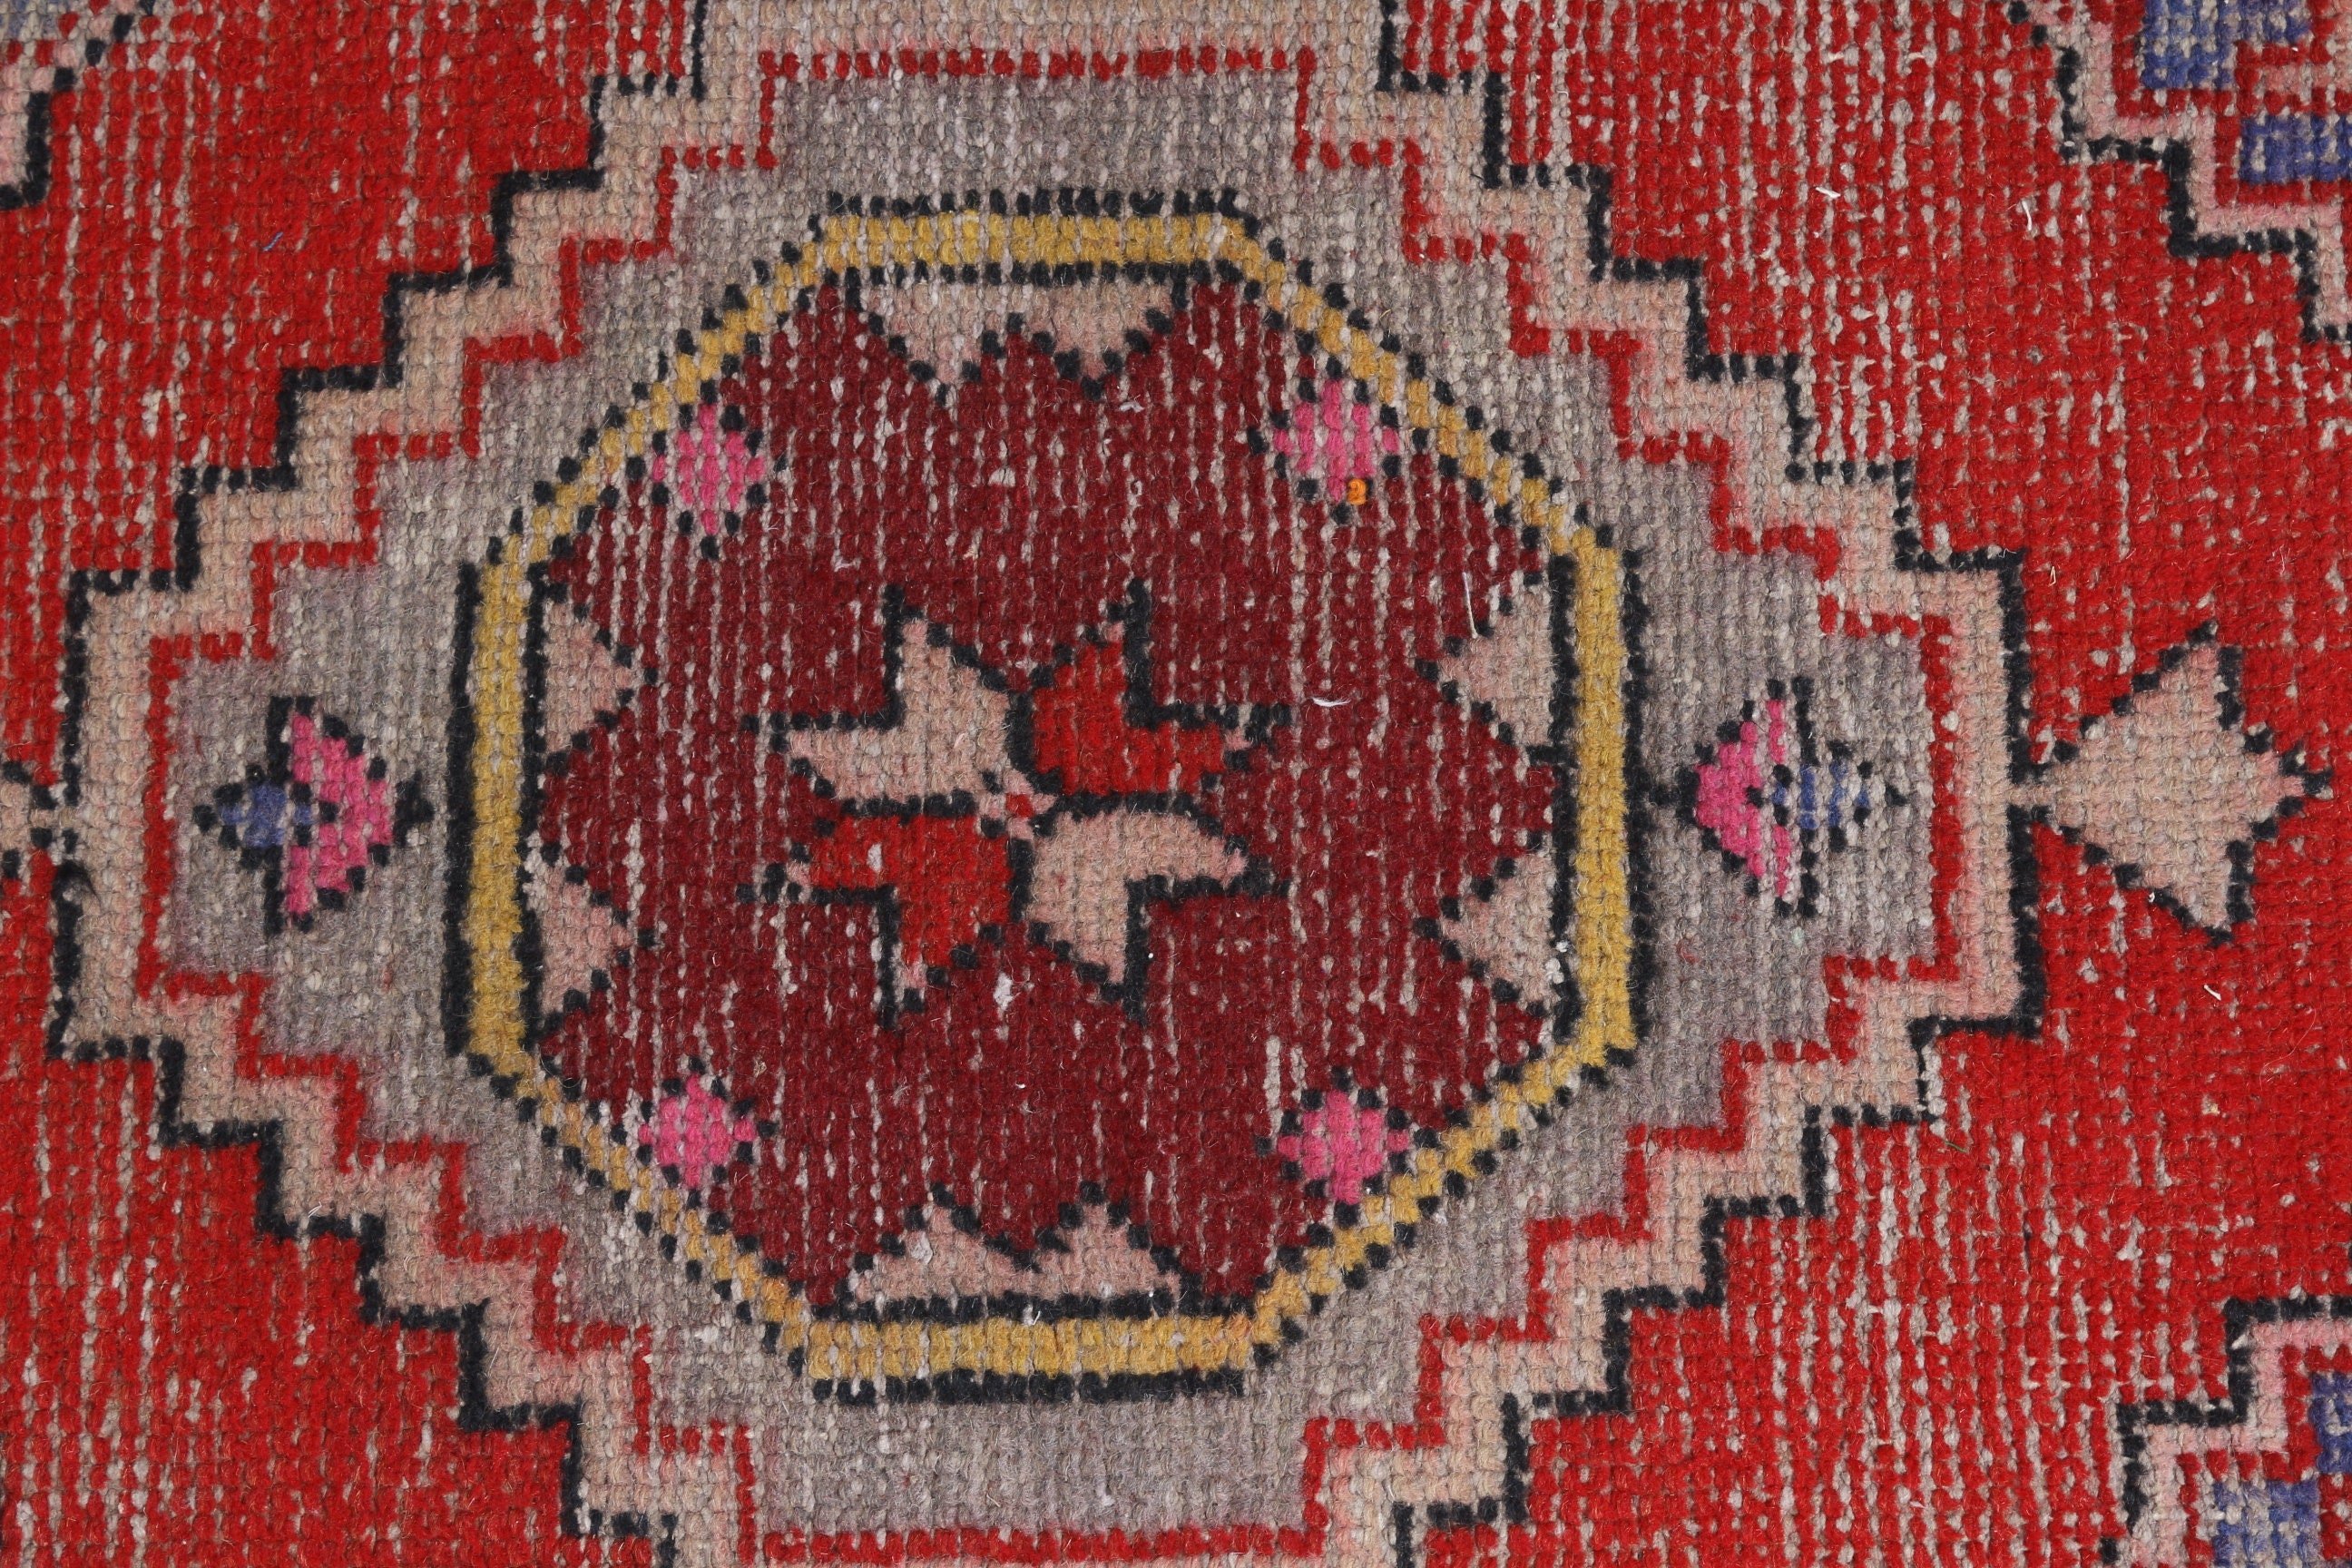 Red Moroccan Rug, Turkish Rugs, Door Mat Rug, Moroccan Rugs, Vintage Rug, Rugs for Entry, 1.4x2.6 ft Small Rug, Bedroom Rugs, Designer Rug